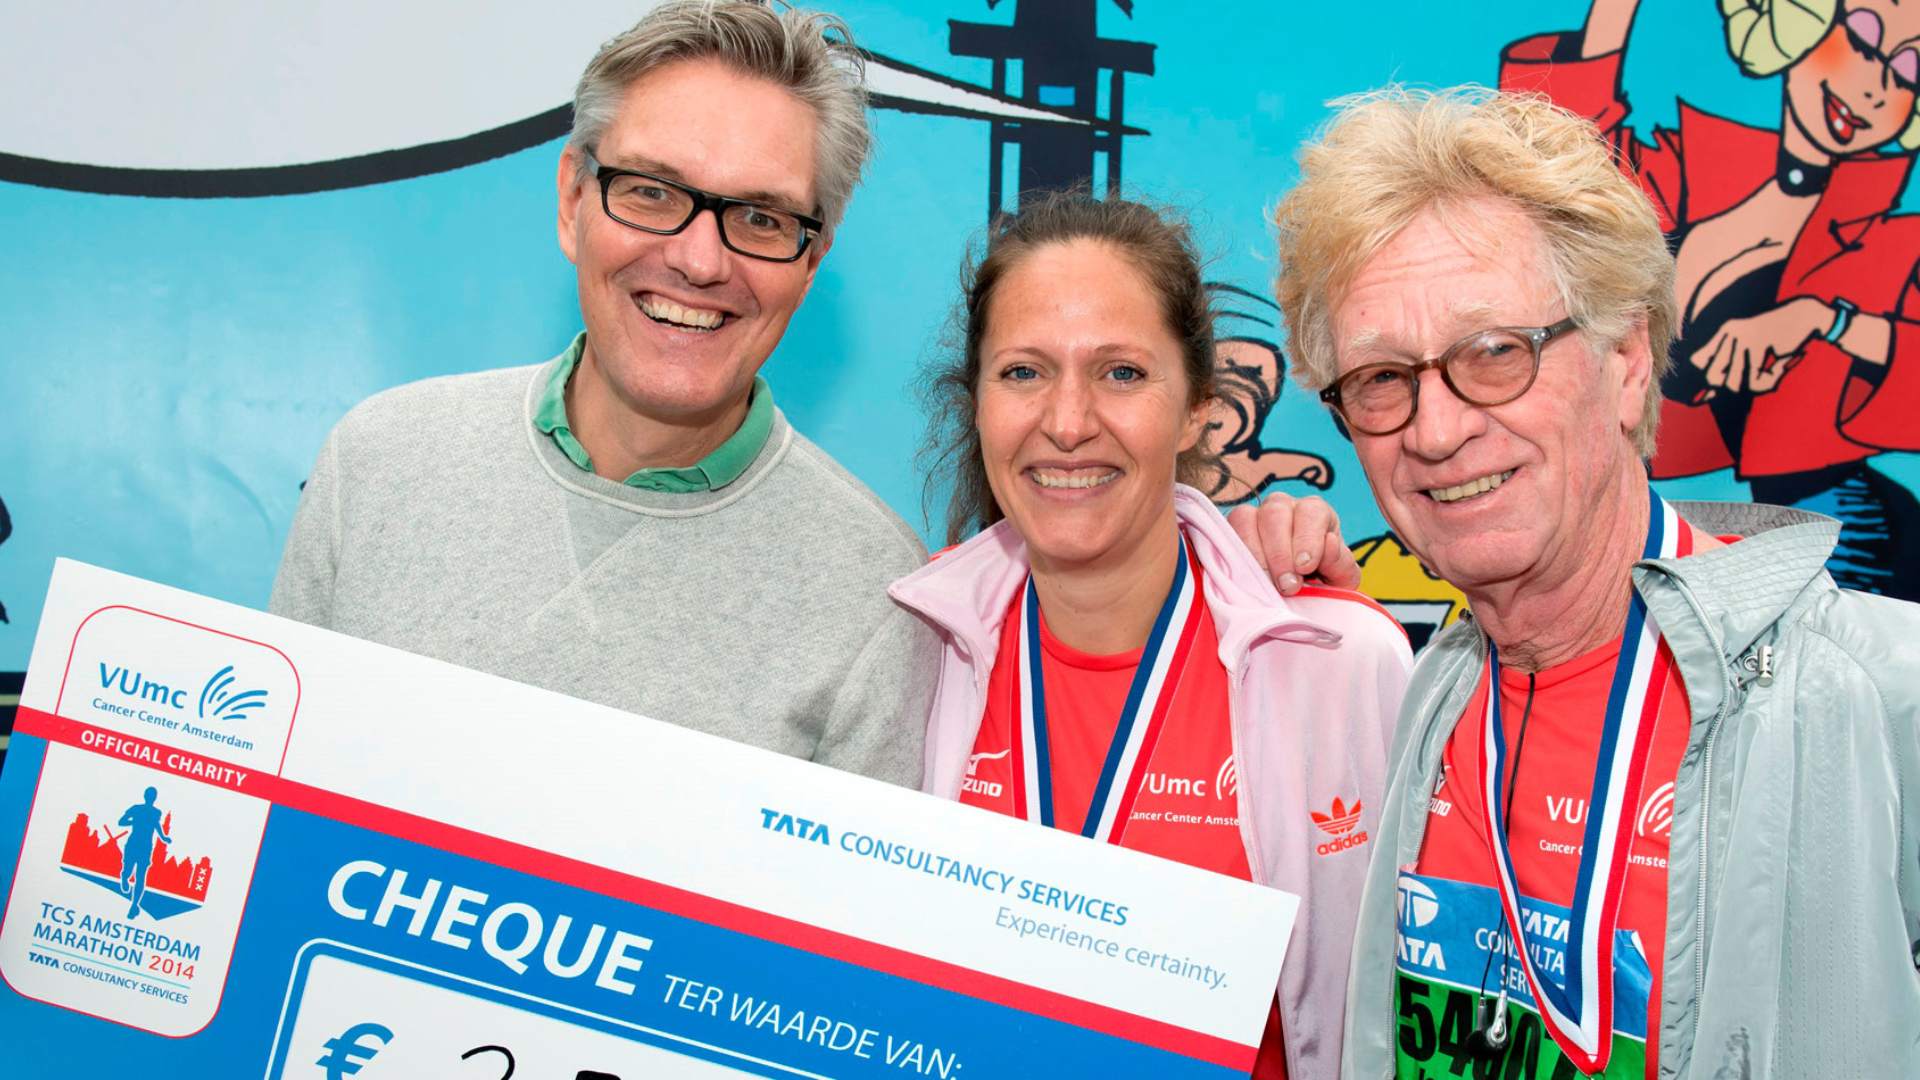 VUmc Cancer Center Amsterdam & TCS Amsterdam Marathon